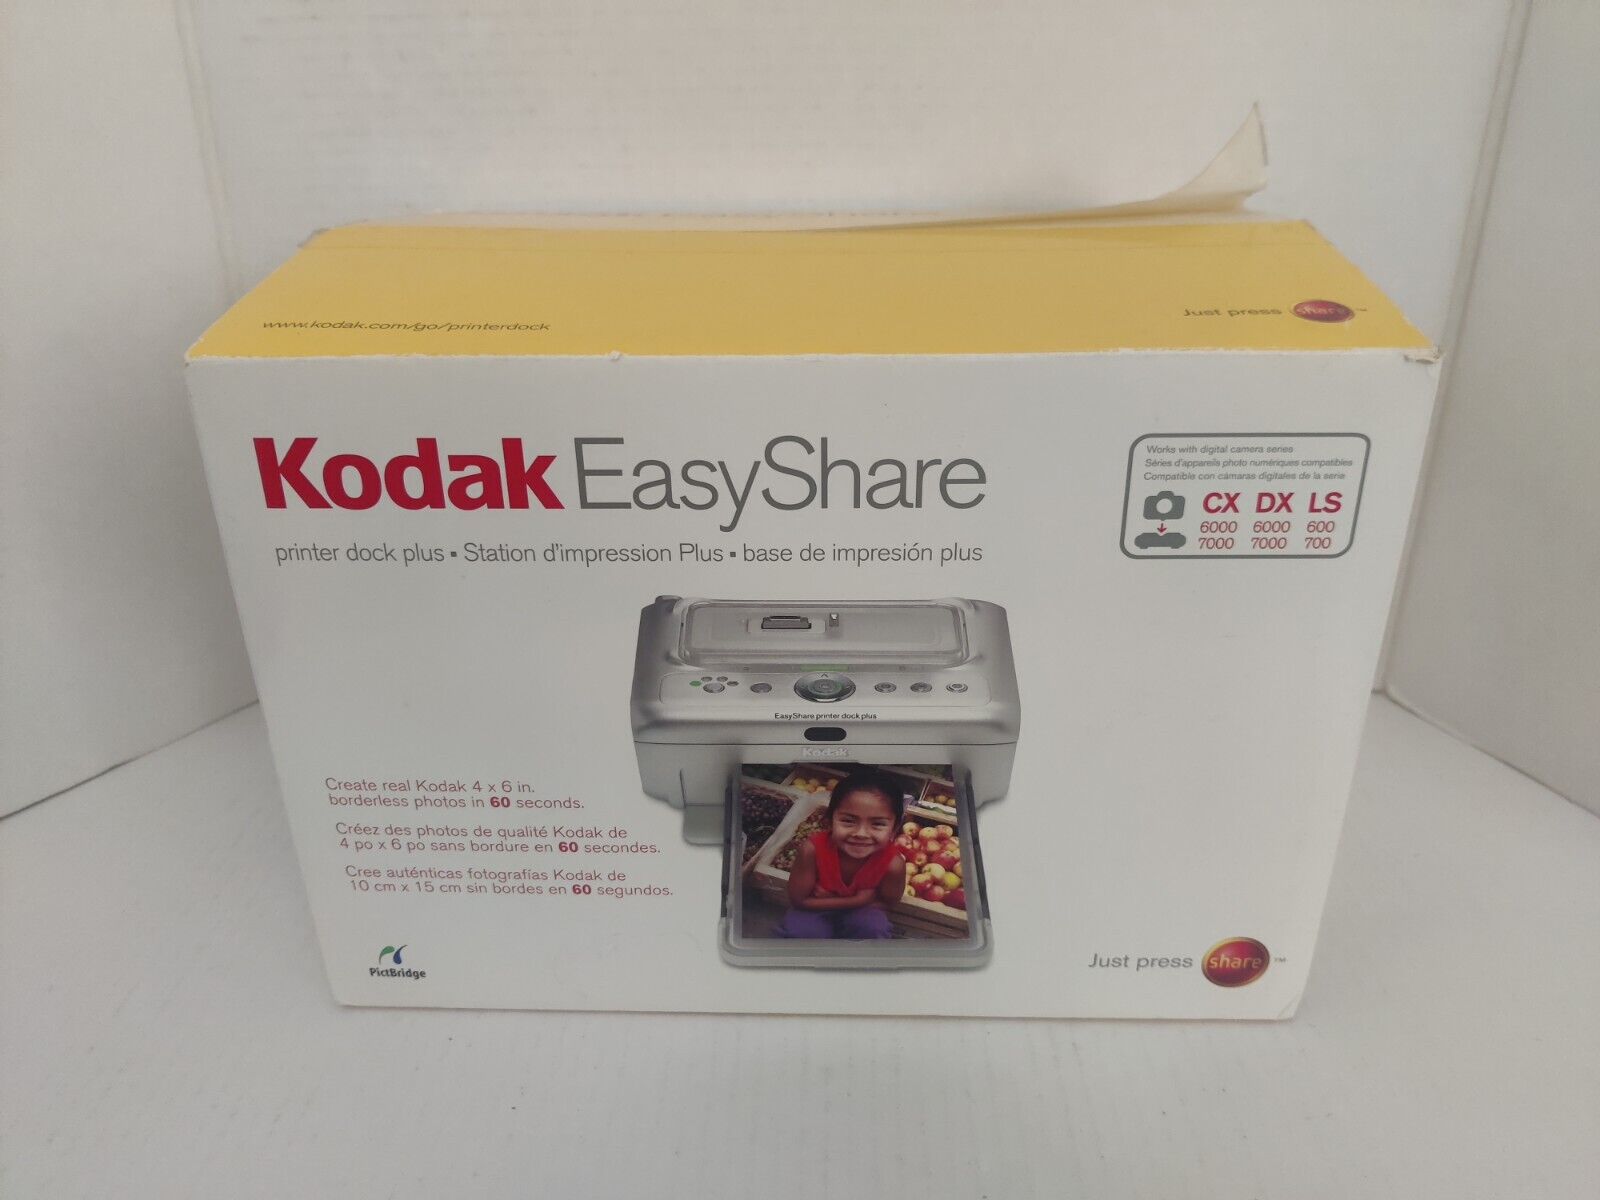 NEW Kodak EasyShare Printer Dock Plus for CX 6000 7000 DX 6000 7000 LS 600 700